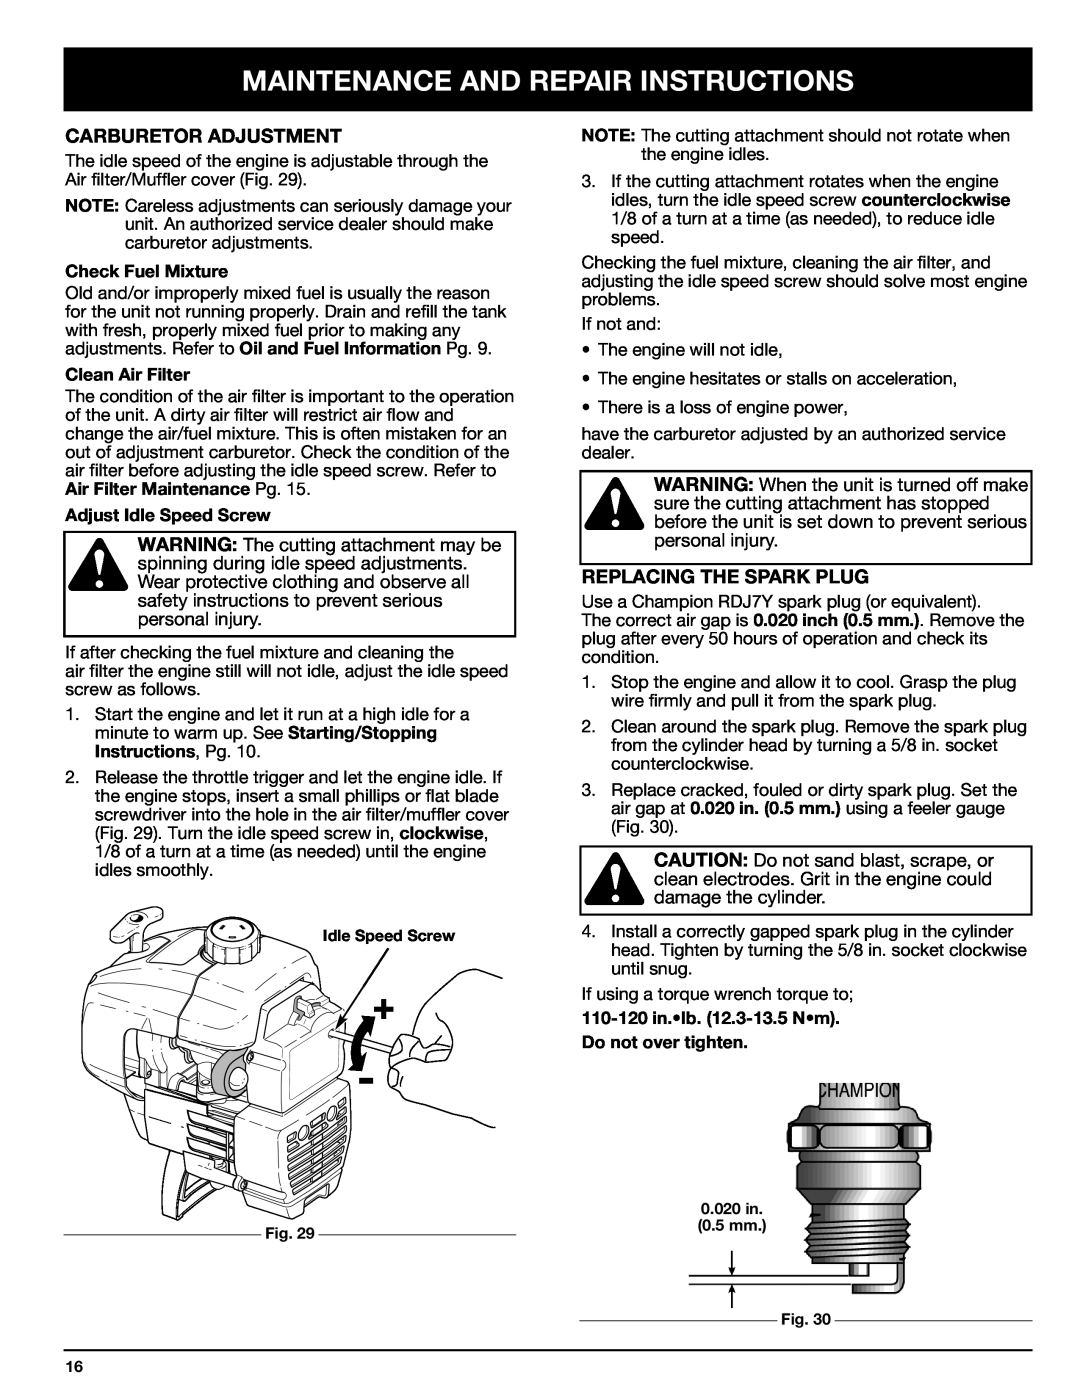 Ryobi 767rj manual Maintenance And Repair Instructions, Carburetor Adjustment, Replacing The Spark Plug, Check Fuel Mixture 